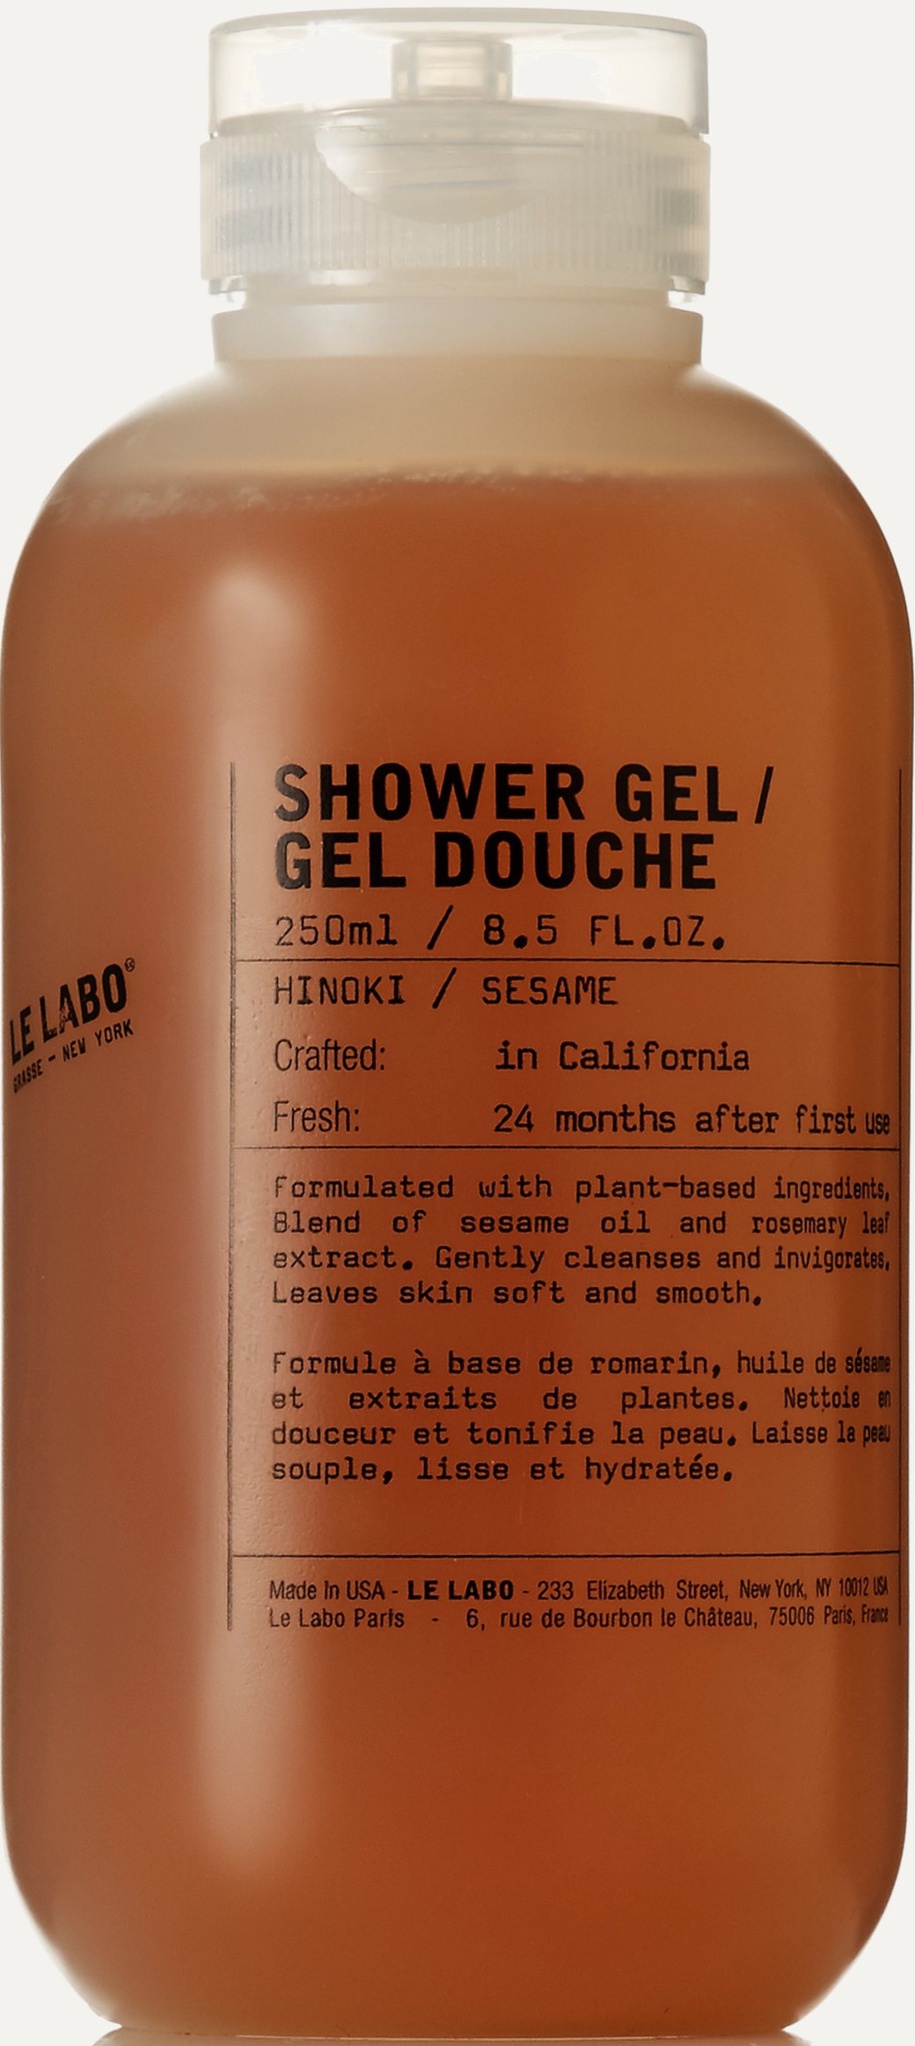 Le Labo Shower Gel Hinoki